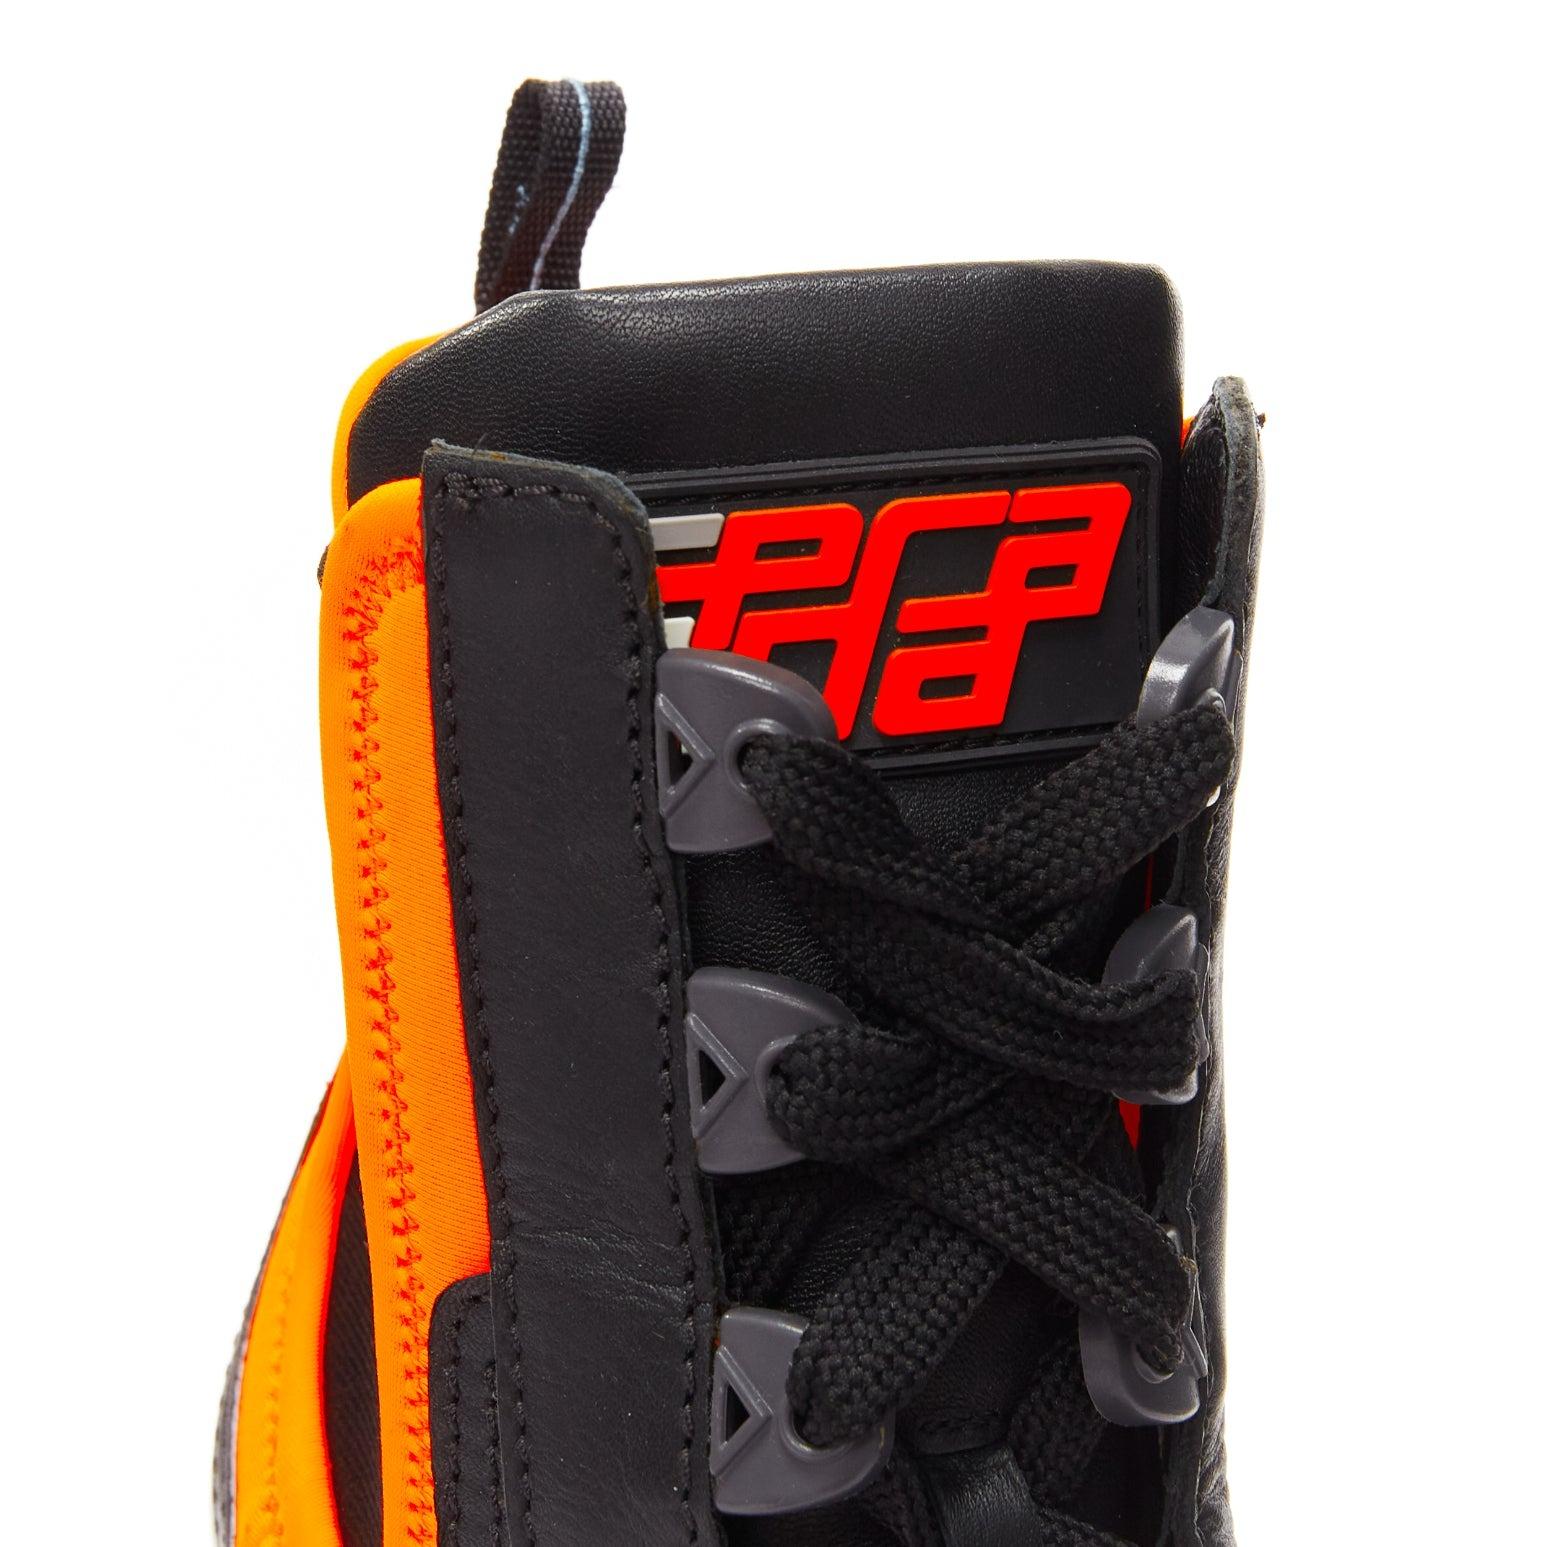 PRADA Runway neon orange neoprene black leather logo boots EU37 Nicki Minaj
Reference: TGAS/D00858
Brand: Prada
Designer: Miuccia Prada
As seen on: Nicki Minaj
Material: Leather, Neoprene
Color: Black, Orange
Pattern: Solid
Closure: Lace Up
Lining: